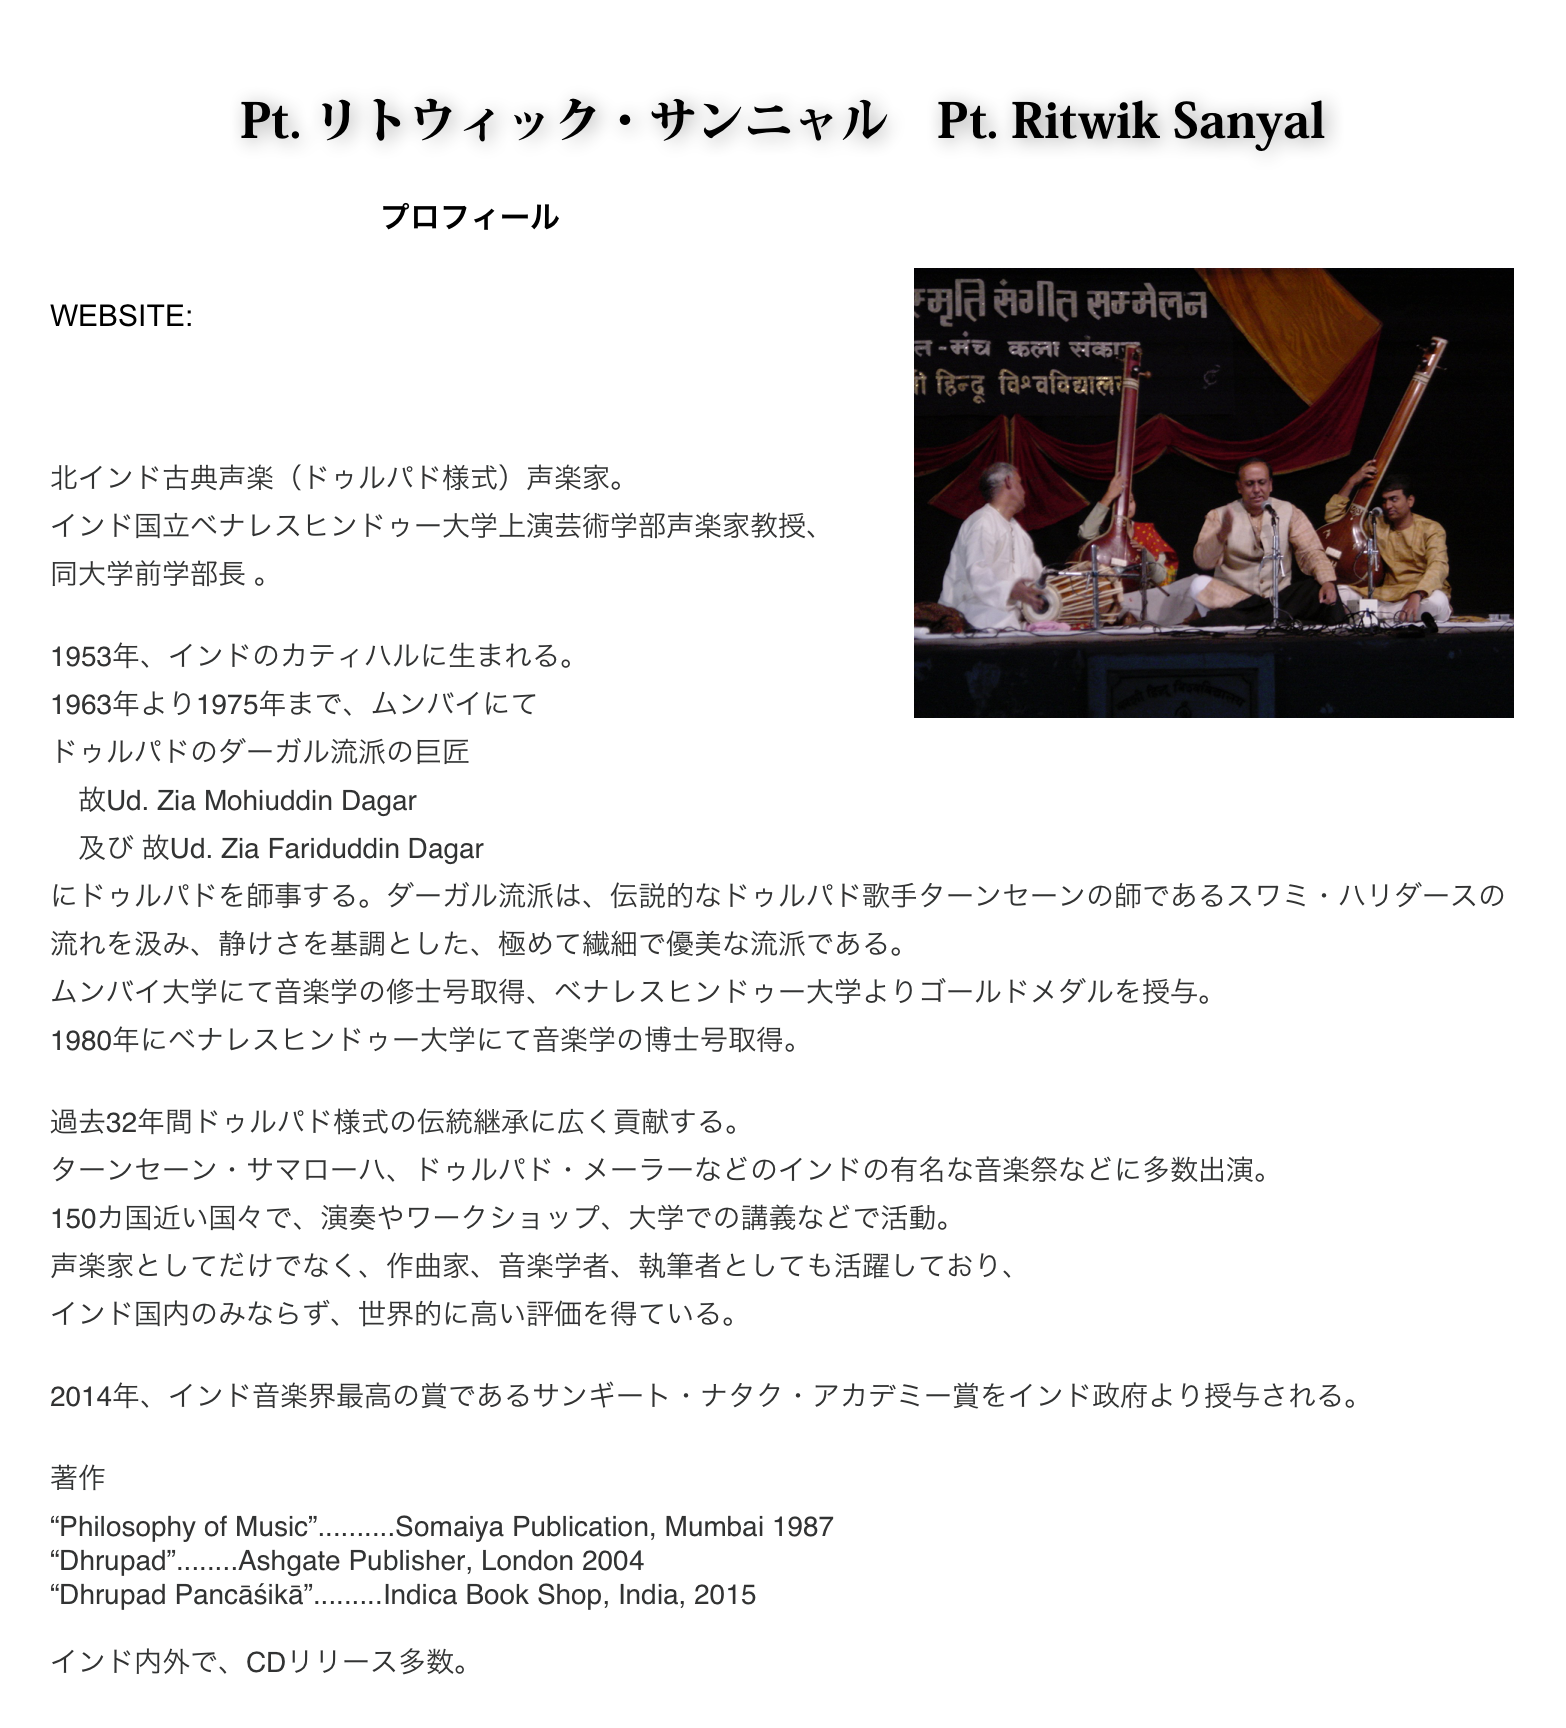 
Pt. リトウィック・サンニャル　Pt. Ritwik Sanyal
　　　　　　　　　　　プロフィール
￼
WEBSITE: http://www.ritwiksanyal.in/index.html
　　　　　http://www.dhrupadindia.com/home.html


北インド古典声楽（ドゥルパド様式）声楽家。
インド国立ベナレスヒンドゥー大学上演芸術学部声楽家教授、
同大学前学部長 。

1953年、インドのカティハルに生まれる。
1963年より1975年まで、ムンバイにて
ドゥルパドのダーガル流派の巨匠
　故Ud. Zia Mohiuddin Dagar 　
　及び 故Ud. Zia Fariduddin Dagar 
にドゥルパドを師事する。ダーガル流派は、伝説的なドゥルパド歌手ターンセーンの師であるスワミ・ハリダースの流れを汲み、静けさを基調とした、極めて繊細で優美な流派である。
ムンバイ大学にて音楽学の修士号取得、ベナレスヒンドゥー大学よりゴールドメダルを授与。
1980年にベナレスヒンドゥー大学にて音楽学の博士号取得。

過去32年間ドゥルパド様式の伝統継承に広く貢献する。 
ターンセーン・サマローハ、ドゥルパド・メーラーなどのインドの有名な音楽祭などに多数出演。
150カ国近い国々で、演奏やワークショップ、大学での講義などで活動。
声楽家としてだけでなく、作曲家、音楽学者、執筆者としても活躍しており、 
インド国内のみならず、世界的に高い評価を得ている。
 
2014年、インド音楽界最高の賞であるサンギート・ナタク・アカデミー賞をインド政府より授与される。

著作
“Philosophy of Music”..........Somaiya Publication, Mumbai 1987
“Dhrupad”........Ashgate Publisher, London 2004
“Dhrupad Pancāśikā”.........Indica Book Shop, India, 2015

インド内外で、CDリリース多数。